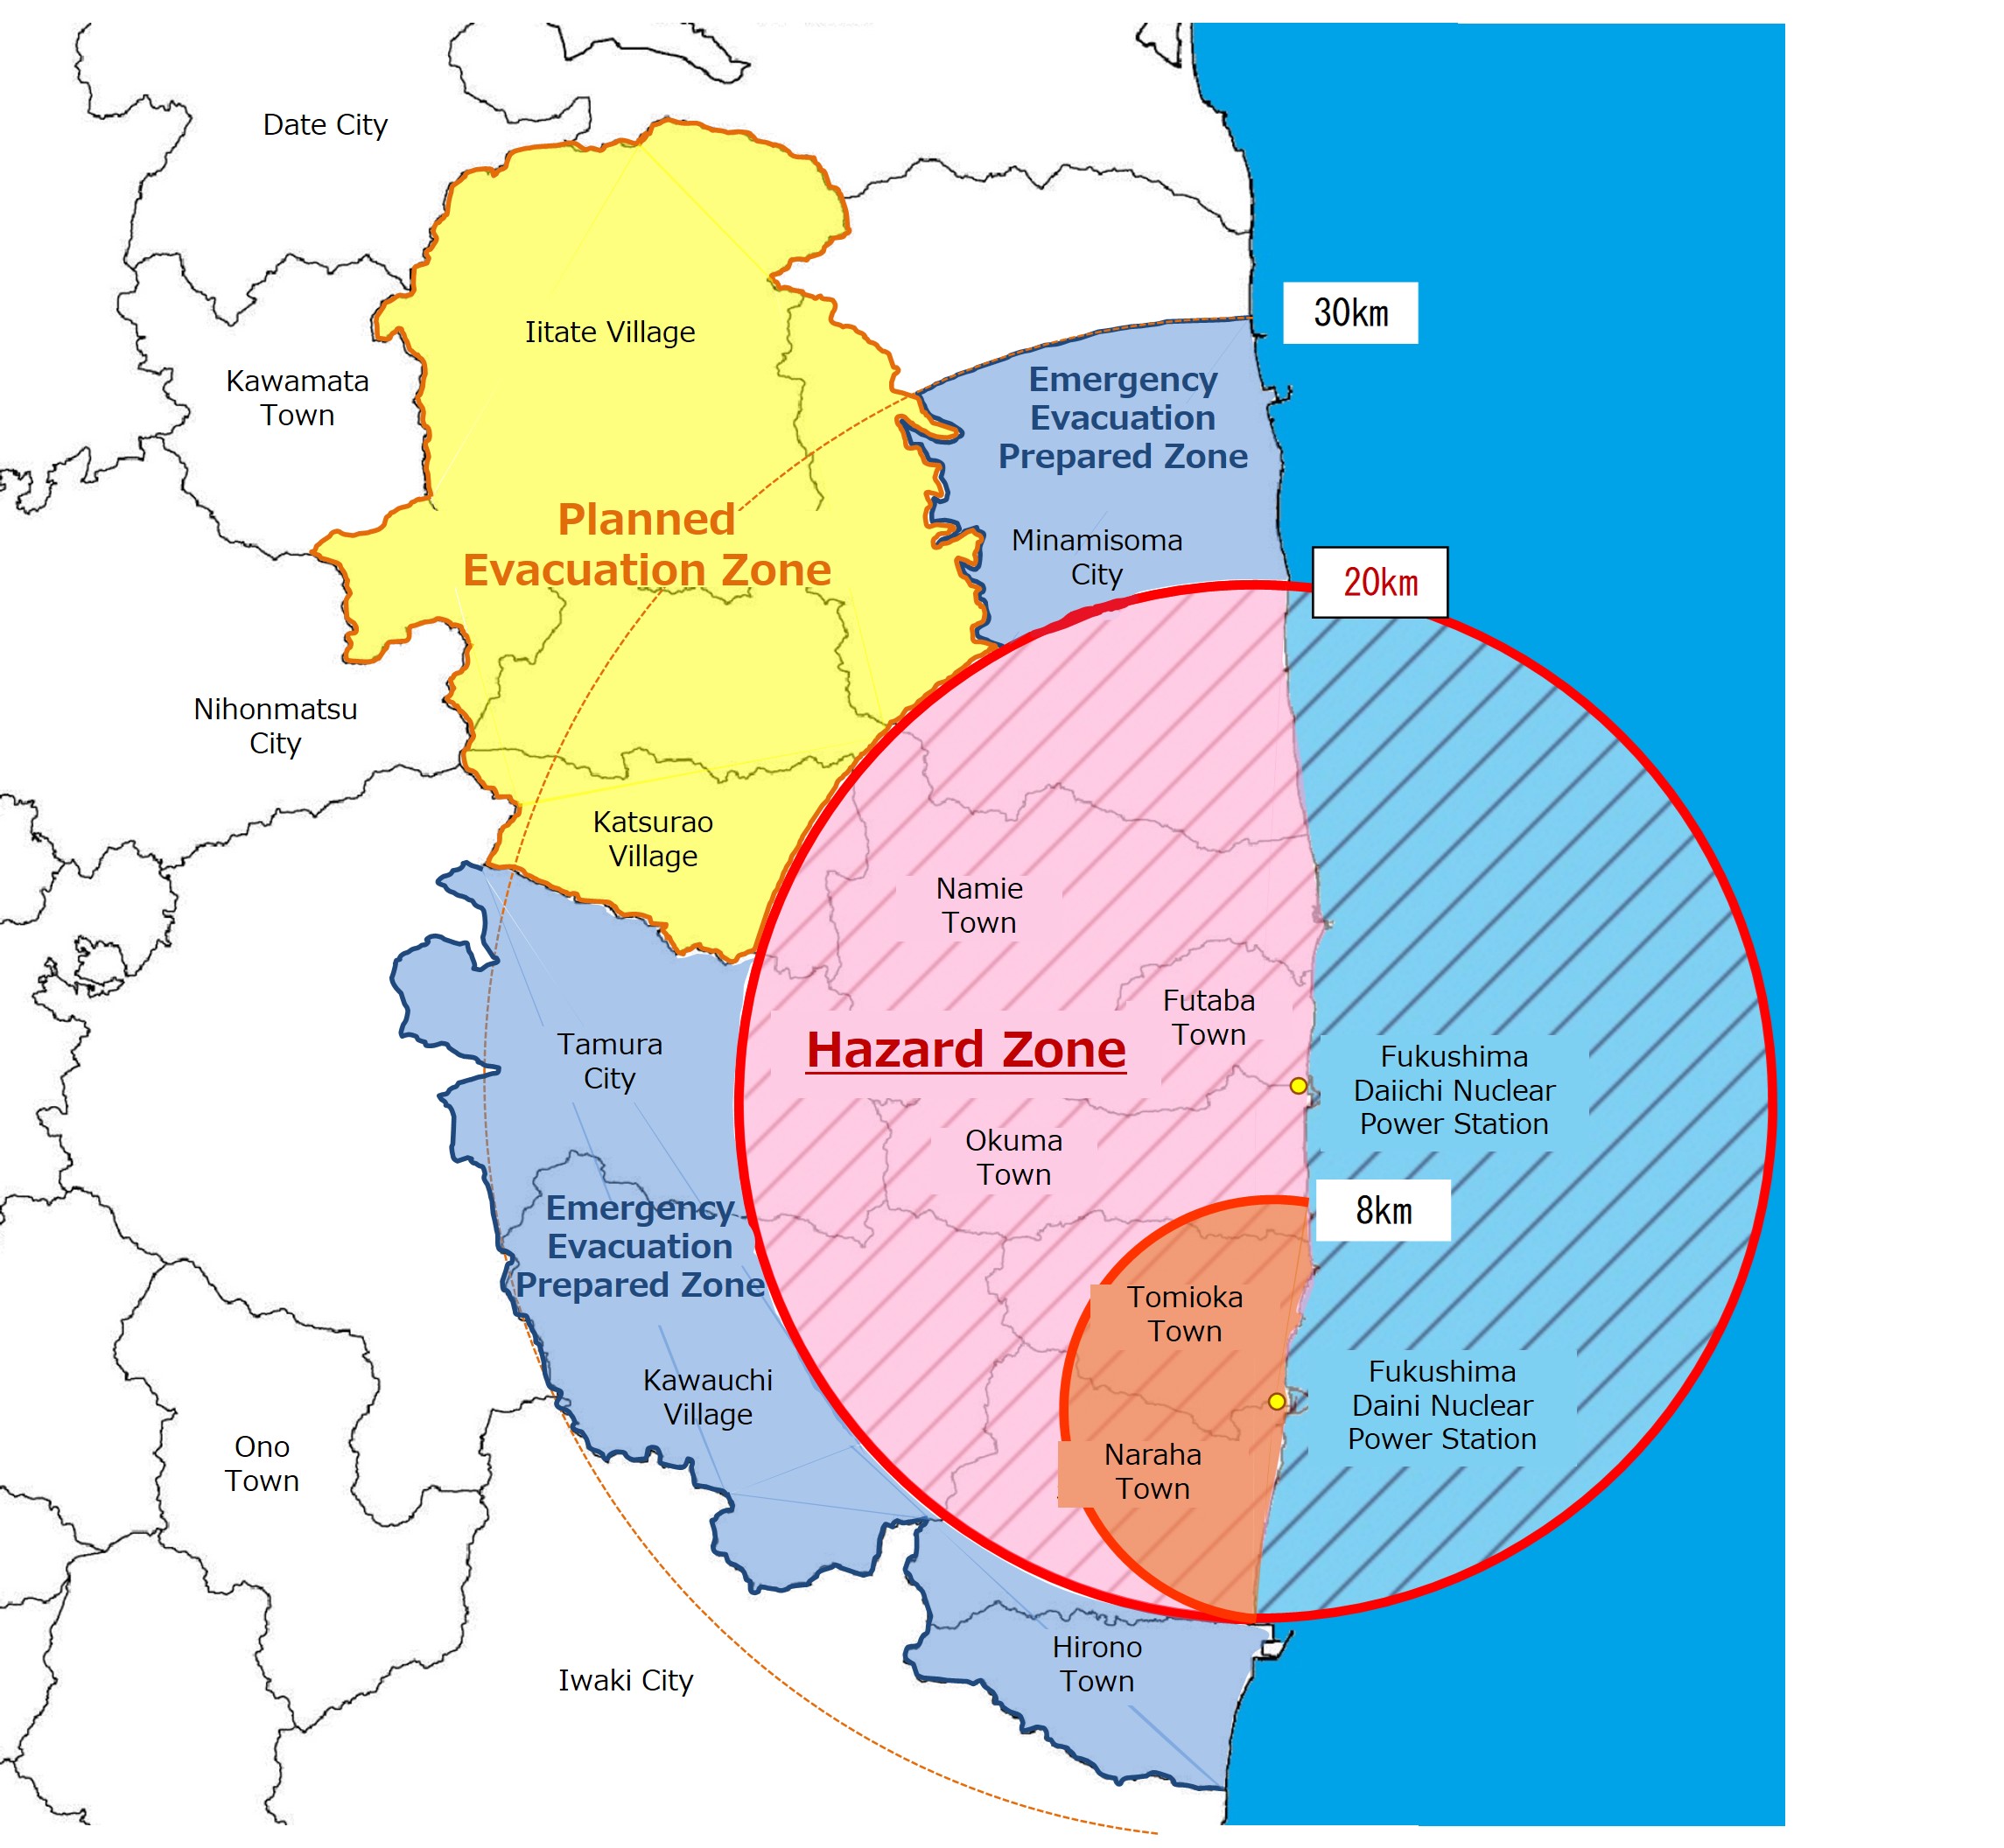 Status of evacuation zones (as of April 22, 2011)1